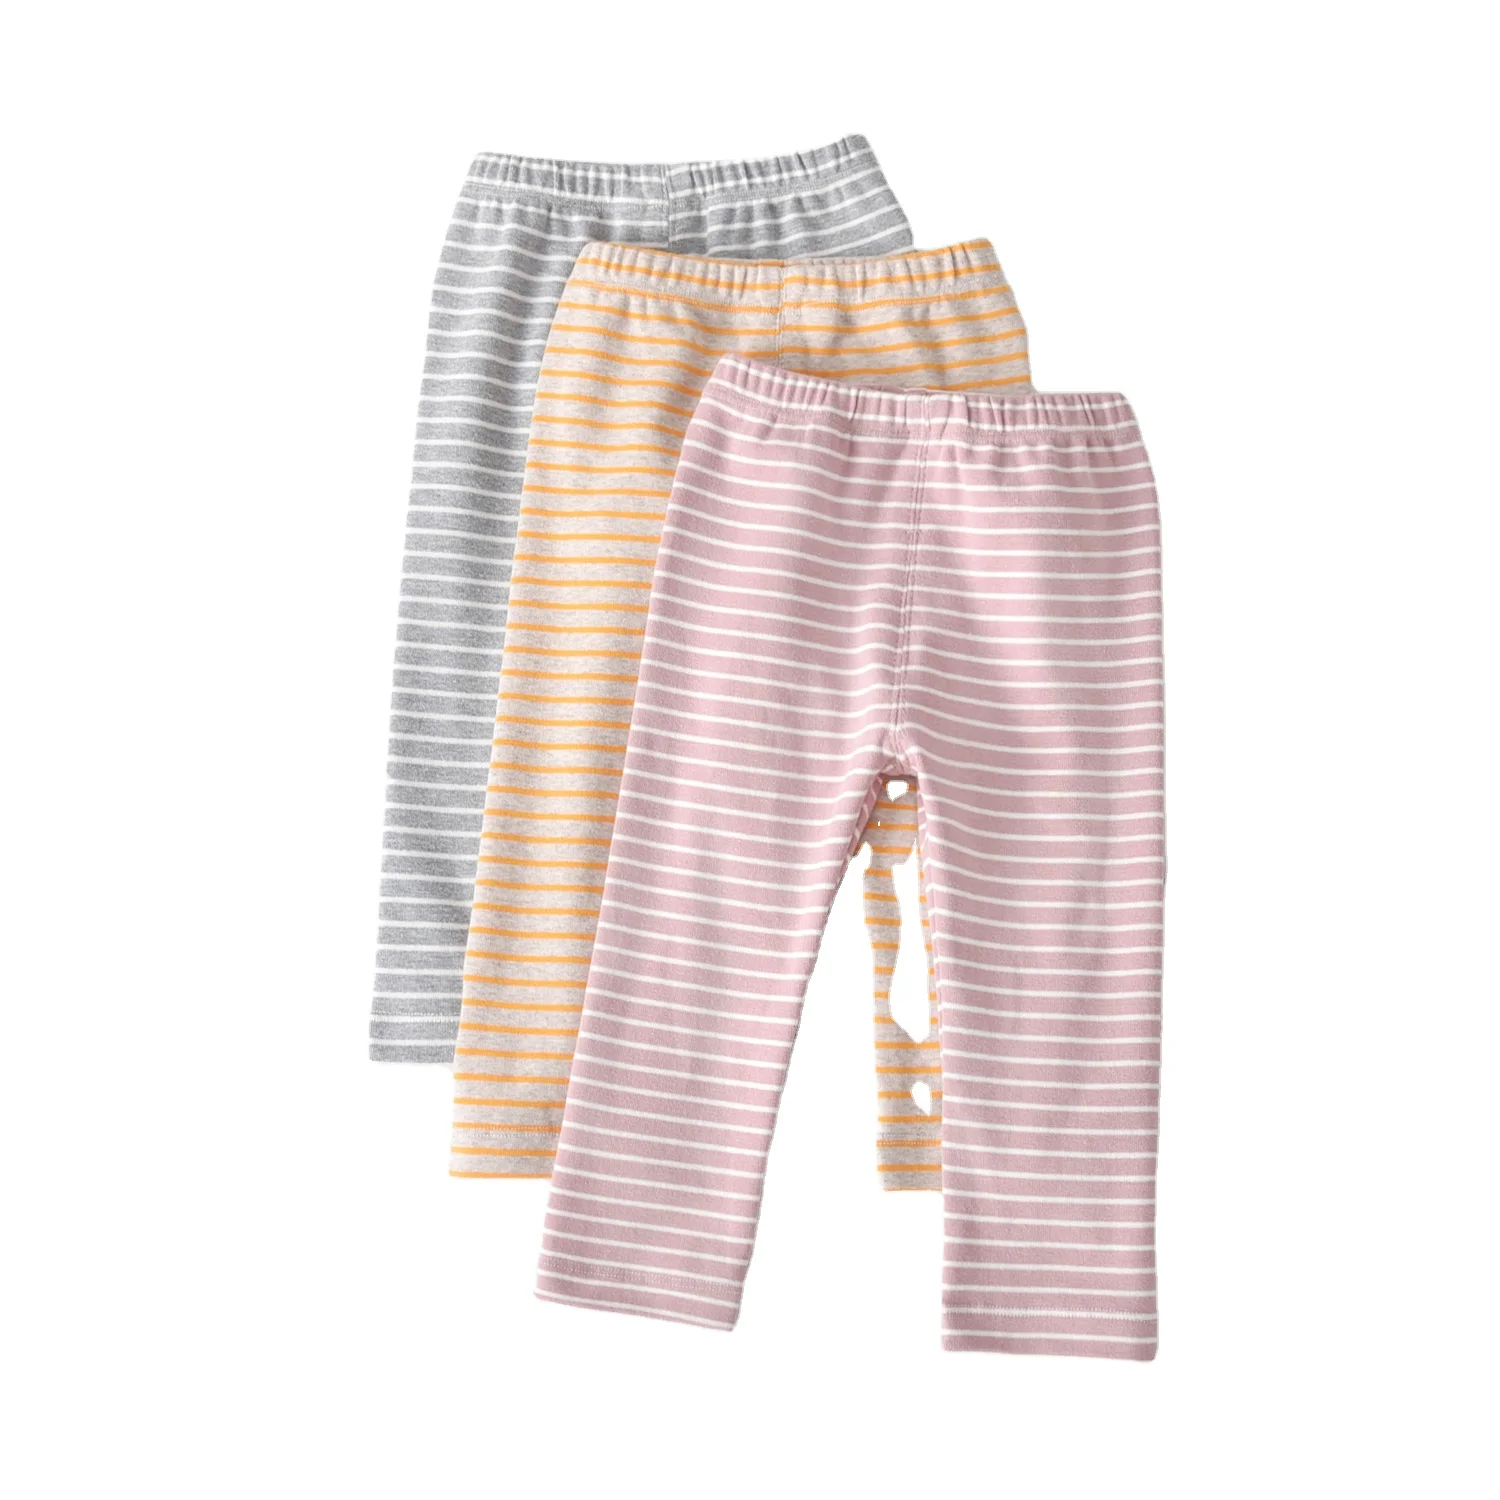 

Low price High Quality Leggings Baby Girl 100% cotton trousers Kids girls pajama pants, Pics show